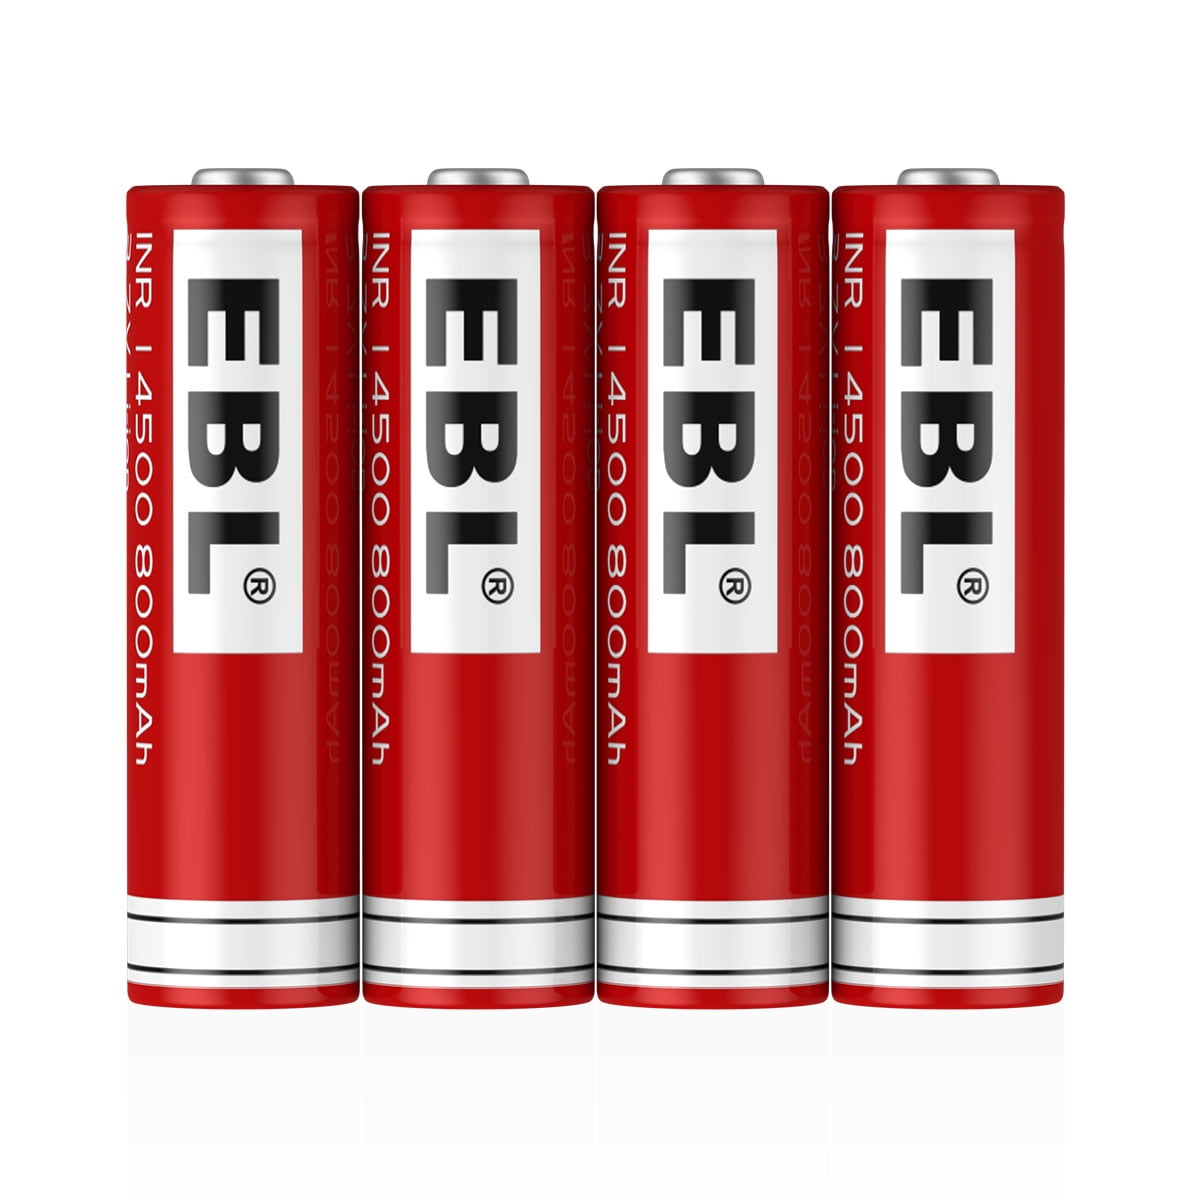 EBL 4-Pack 14500 3.7V 800mAh Li-Ion Rechargeable Batteries 